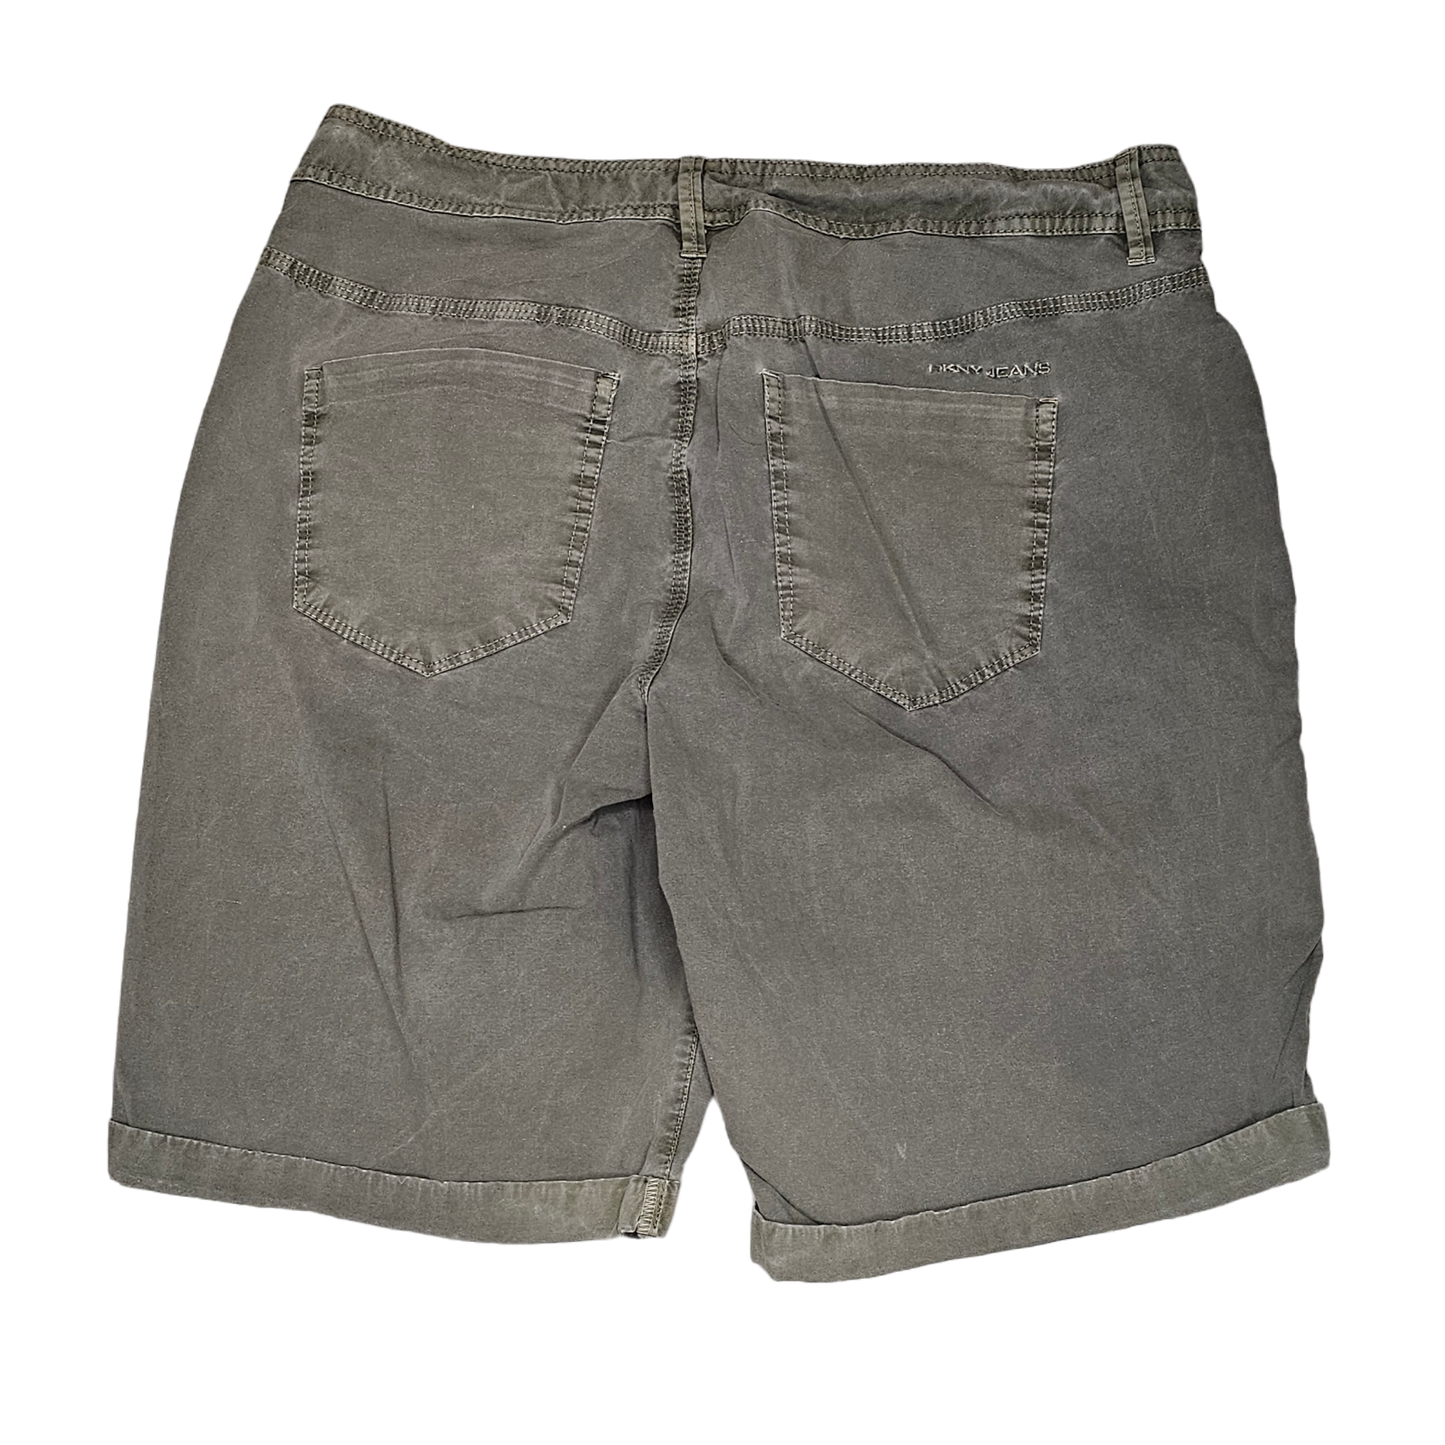 Shorts By Dkny  Size: 6